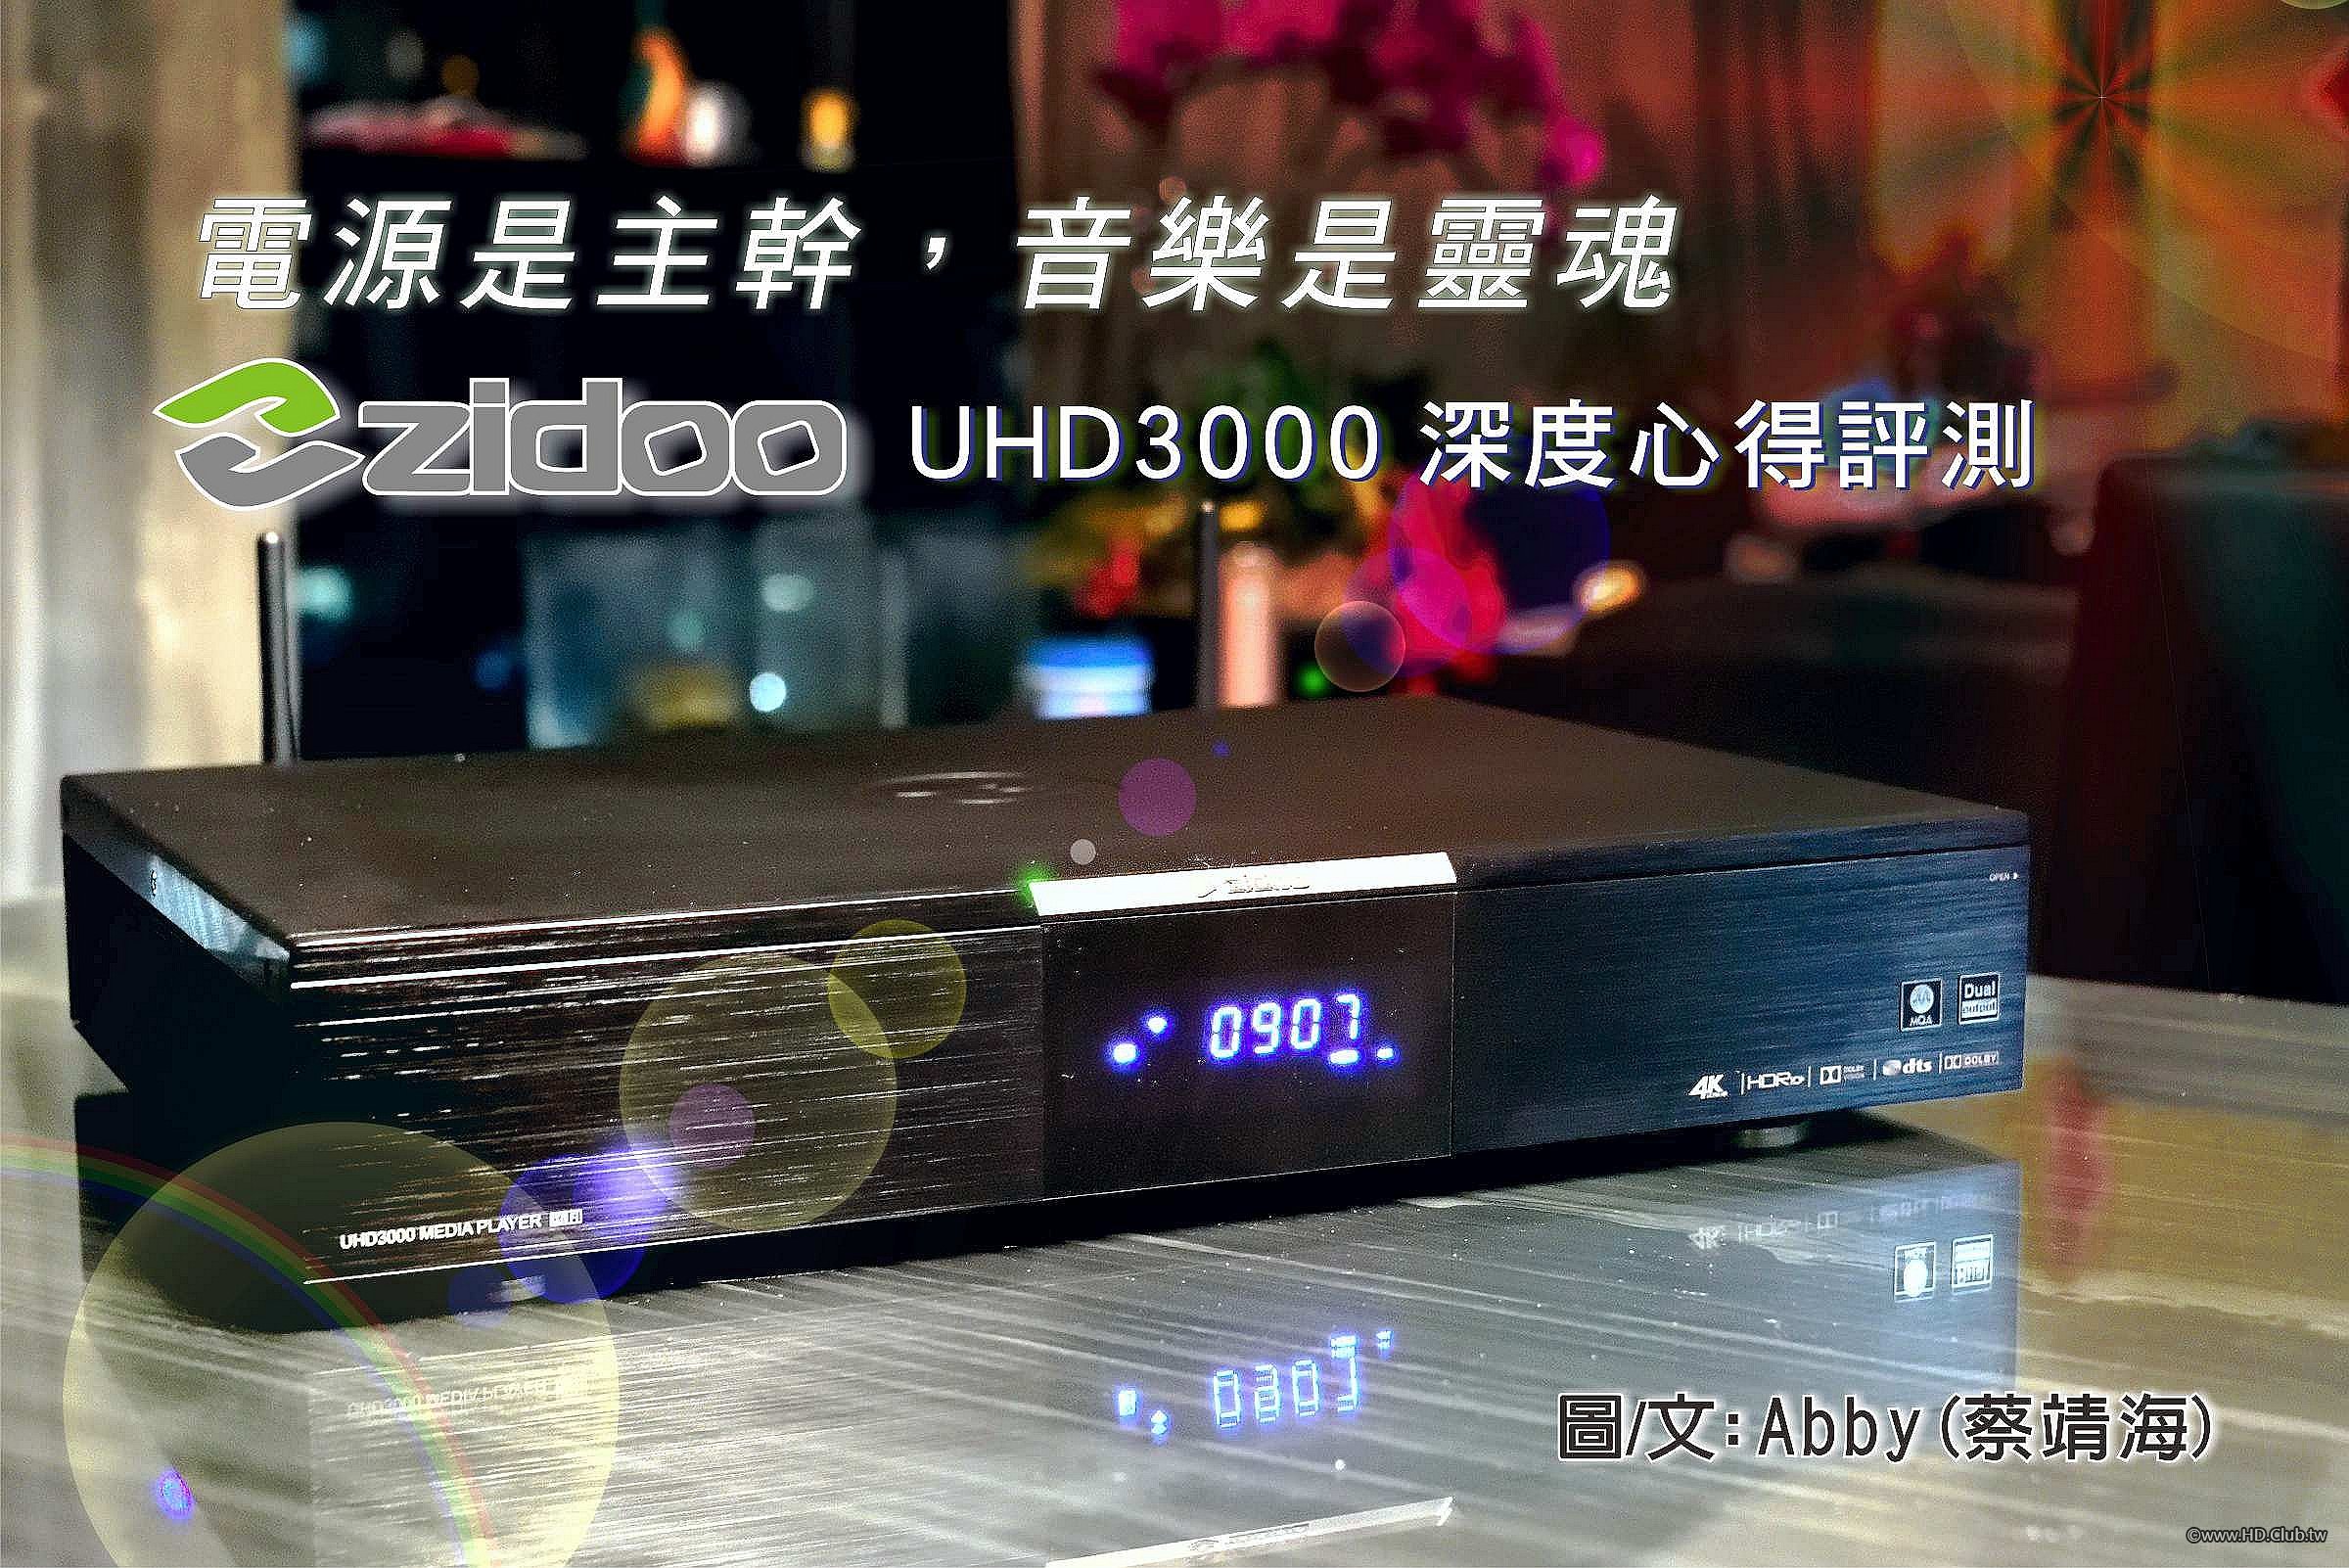 Zidoo UHD3000 封面.-4.jpg